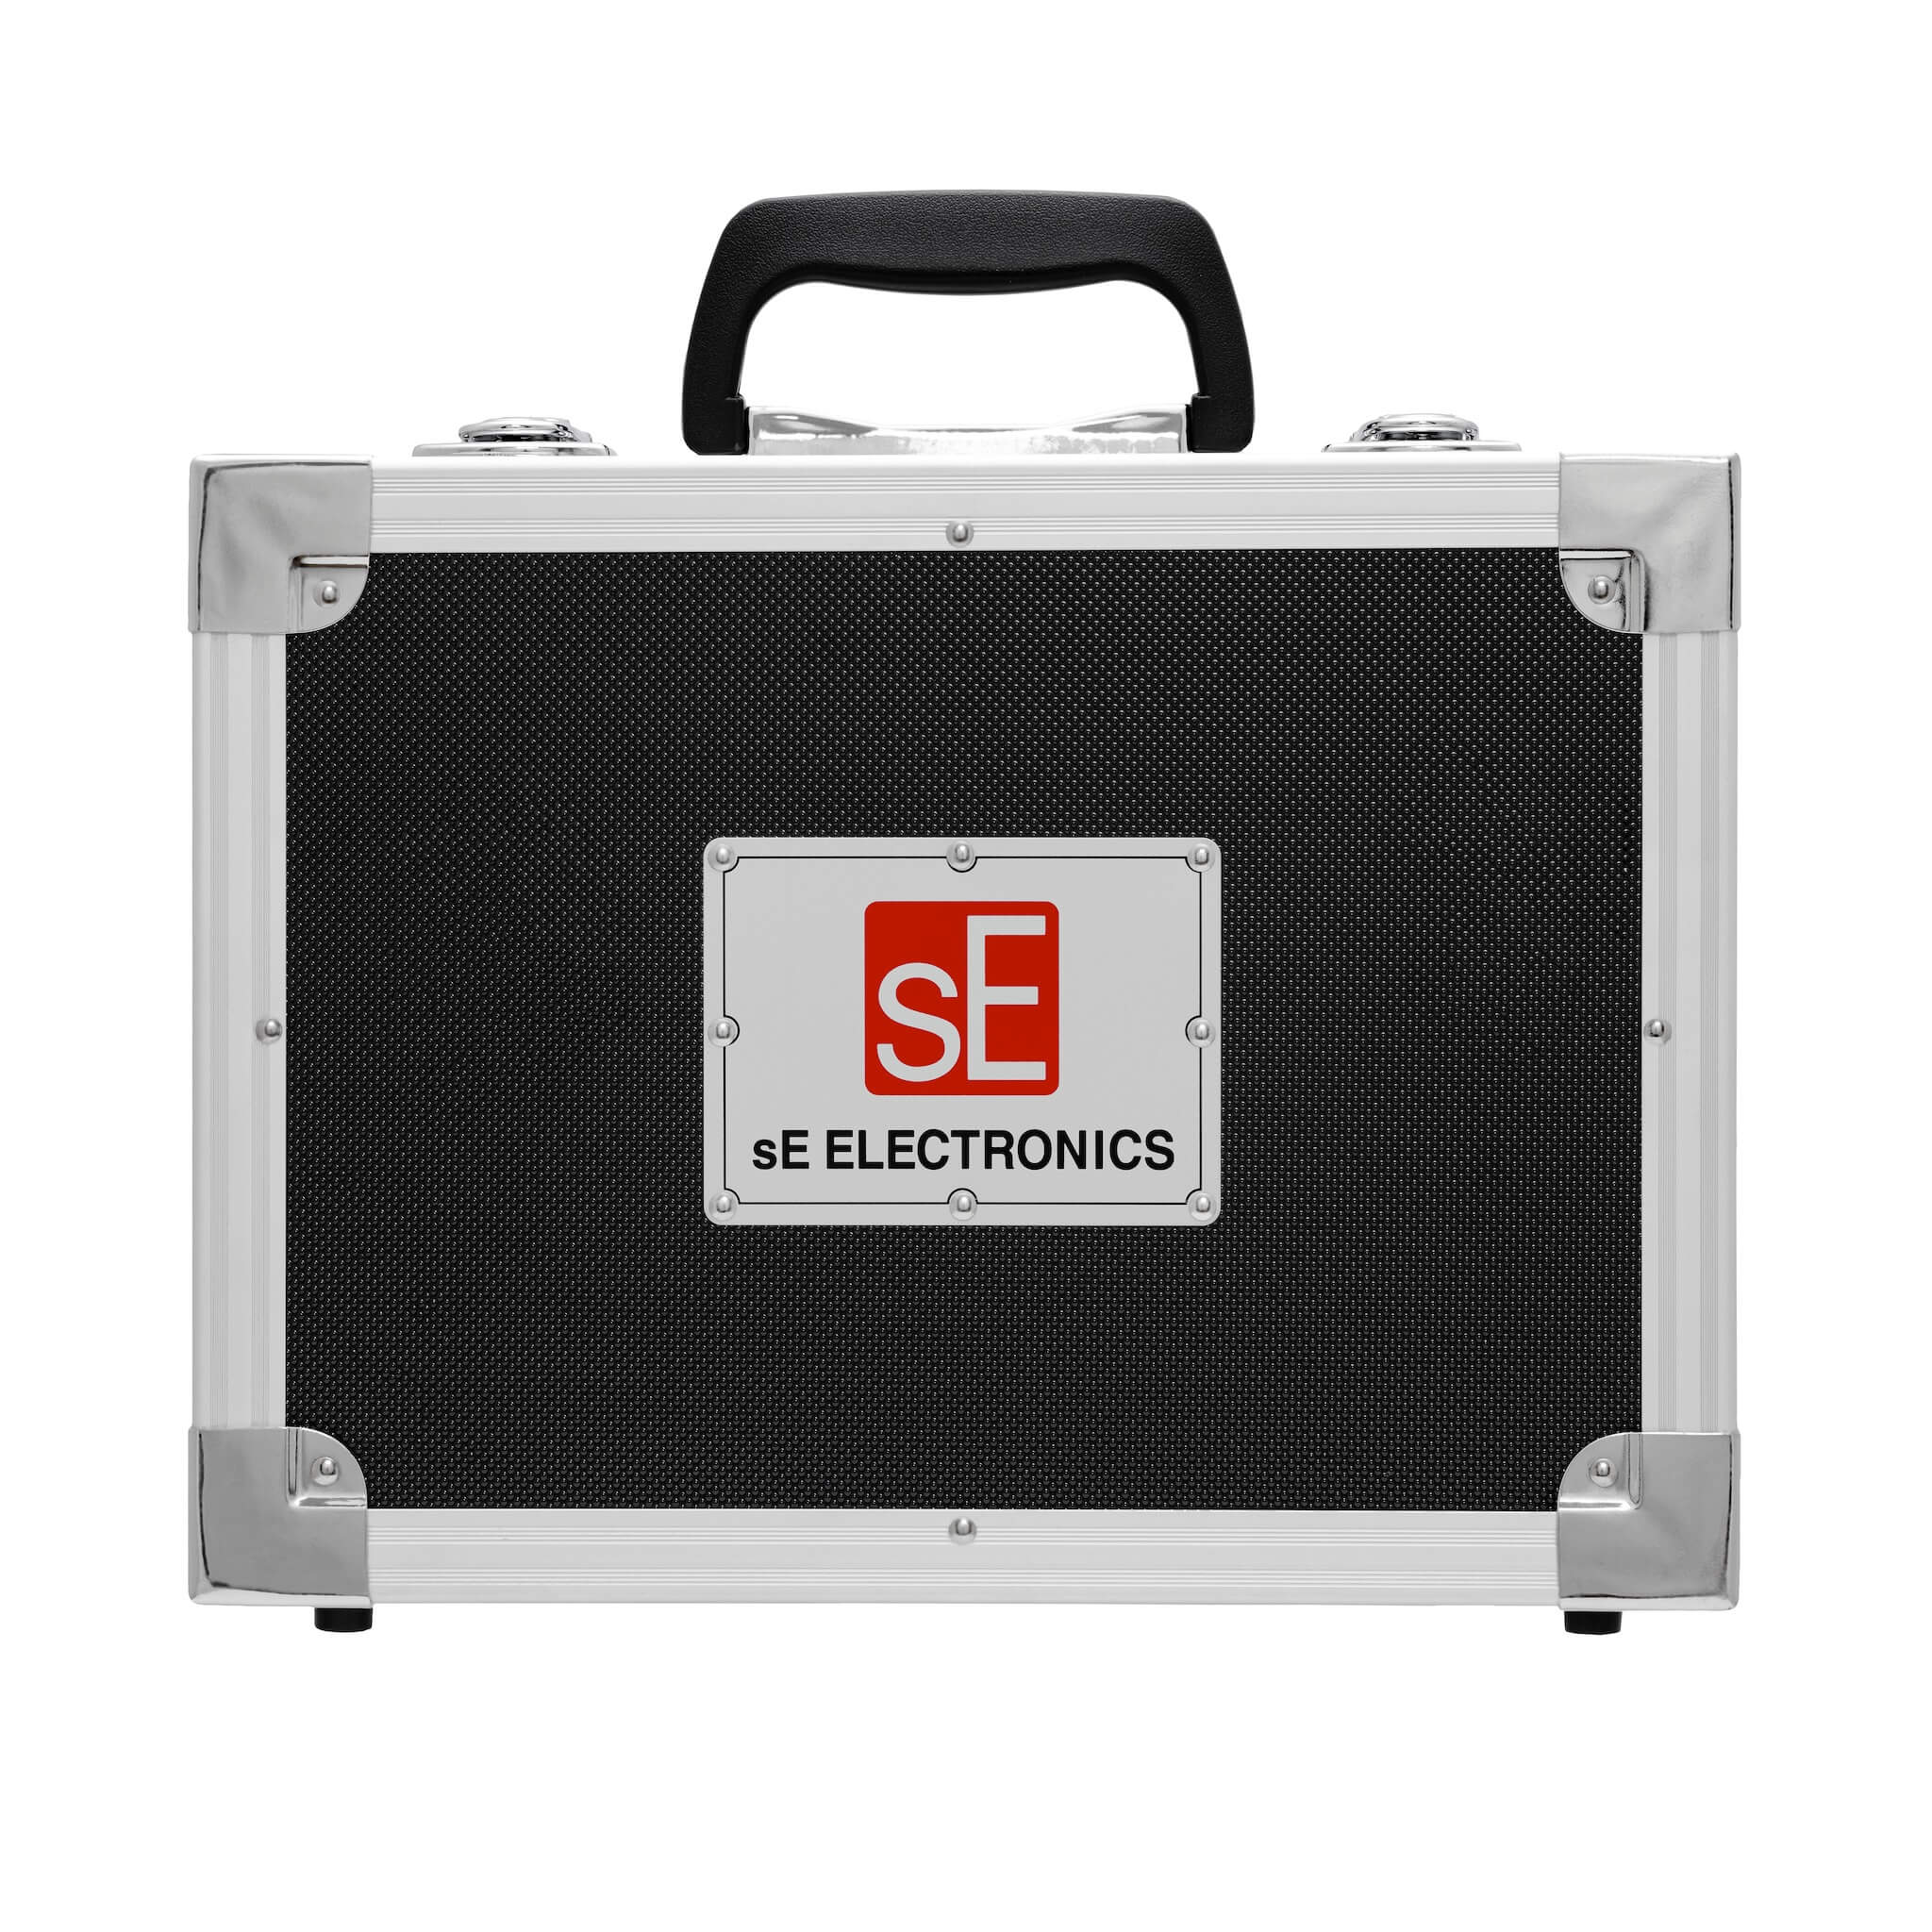 sE Electronics sE4400a SP - Matched Pair of sE4400 Microphones, case